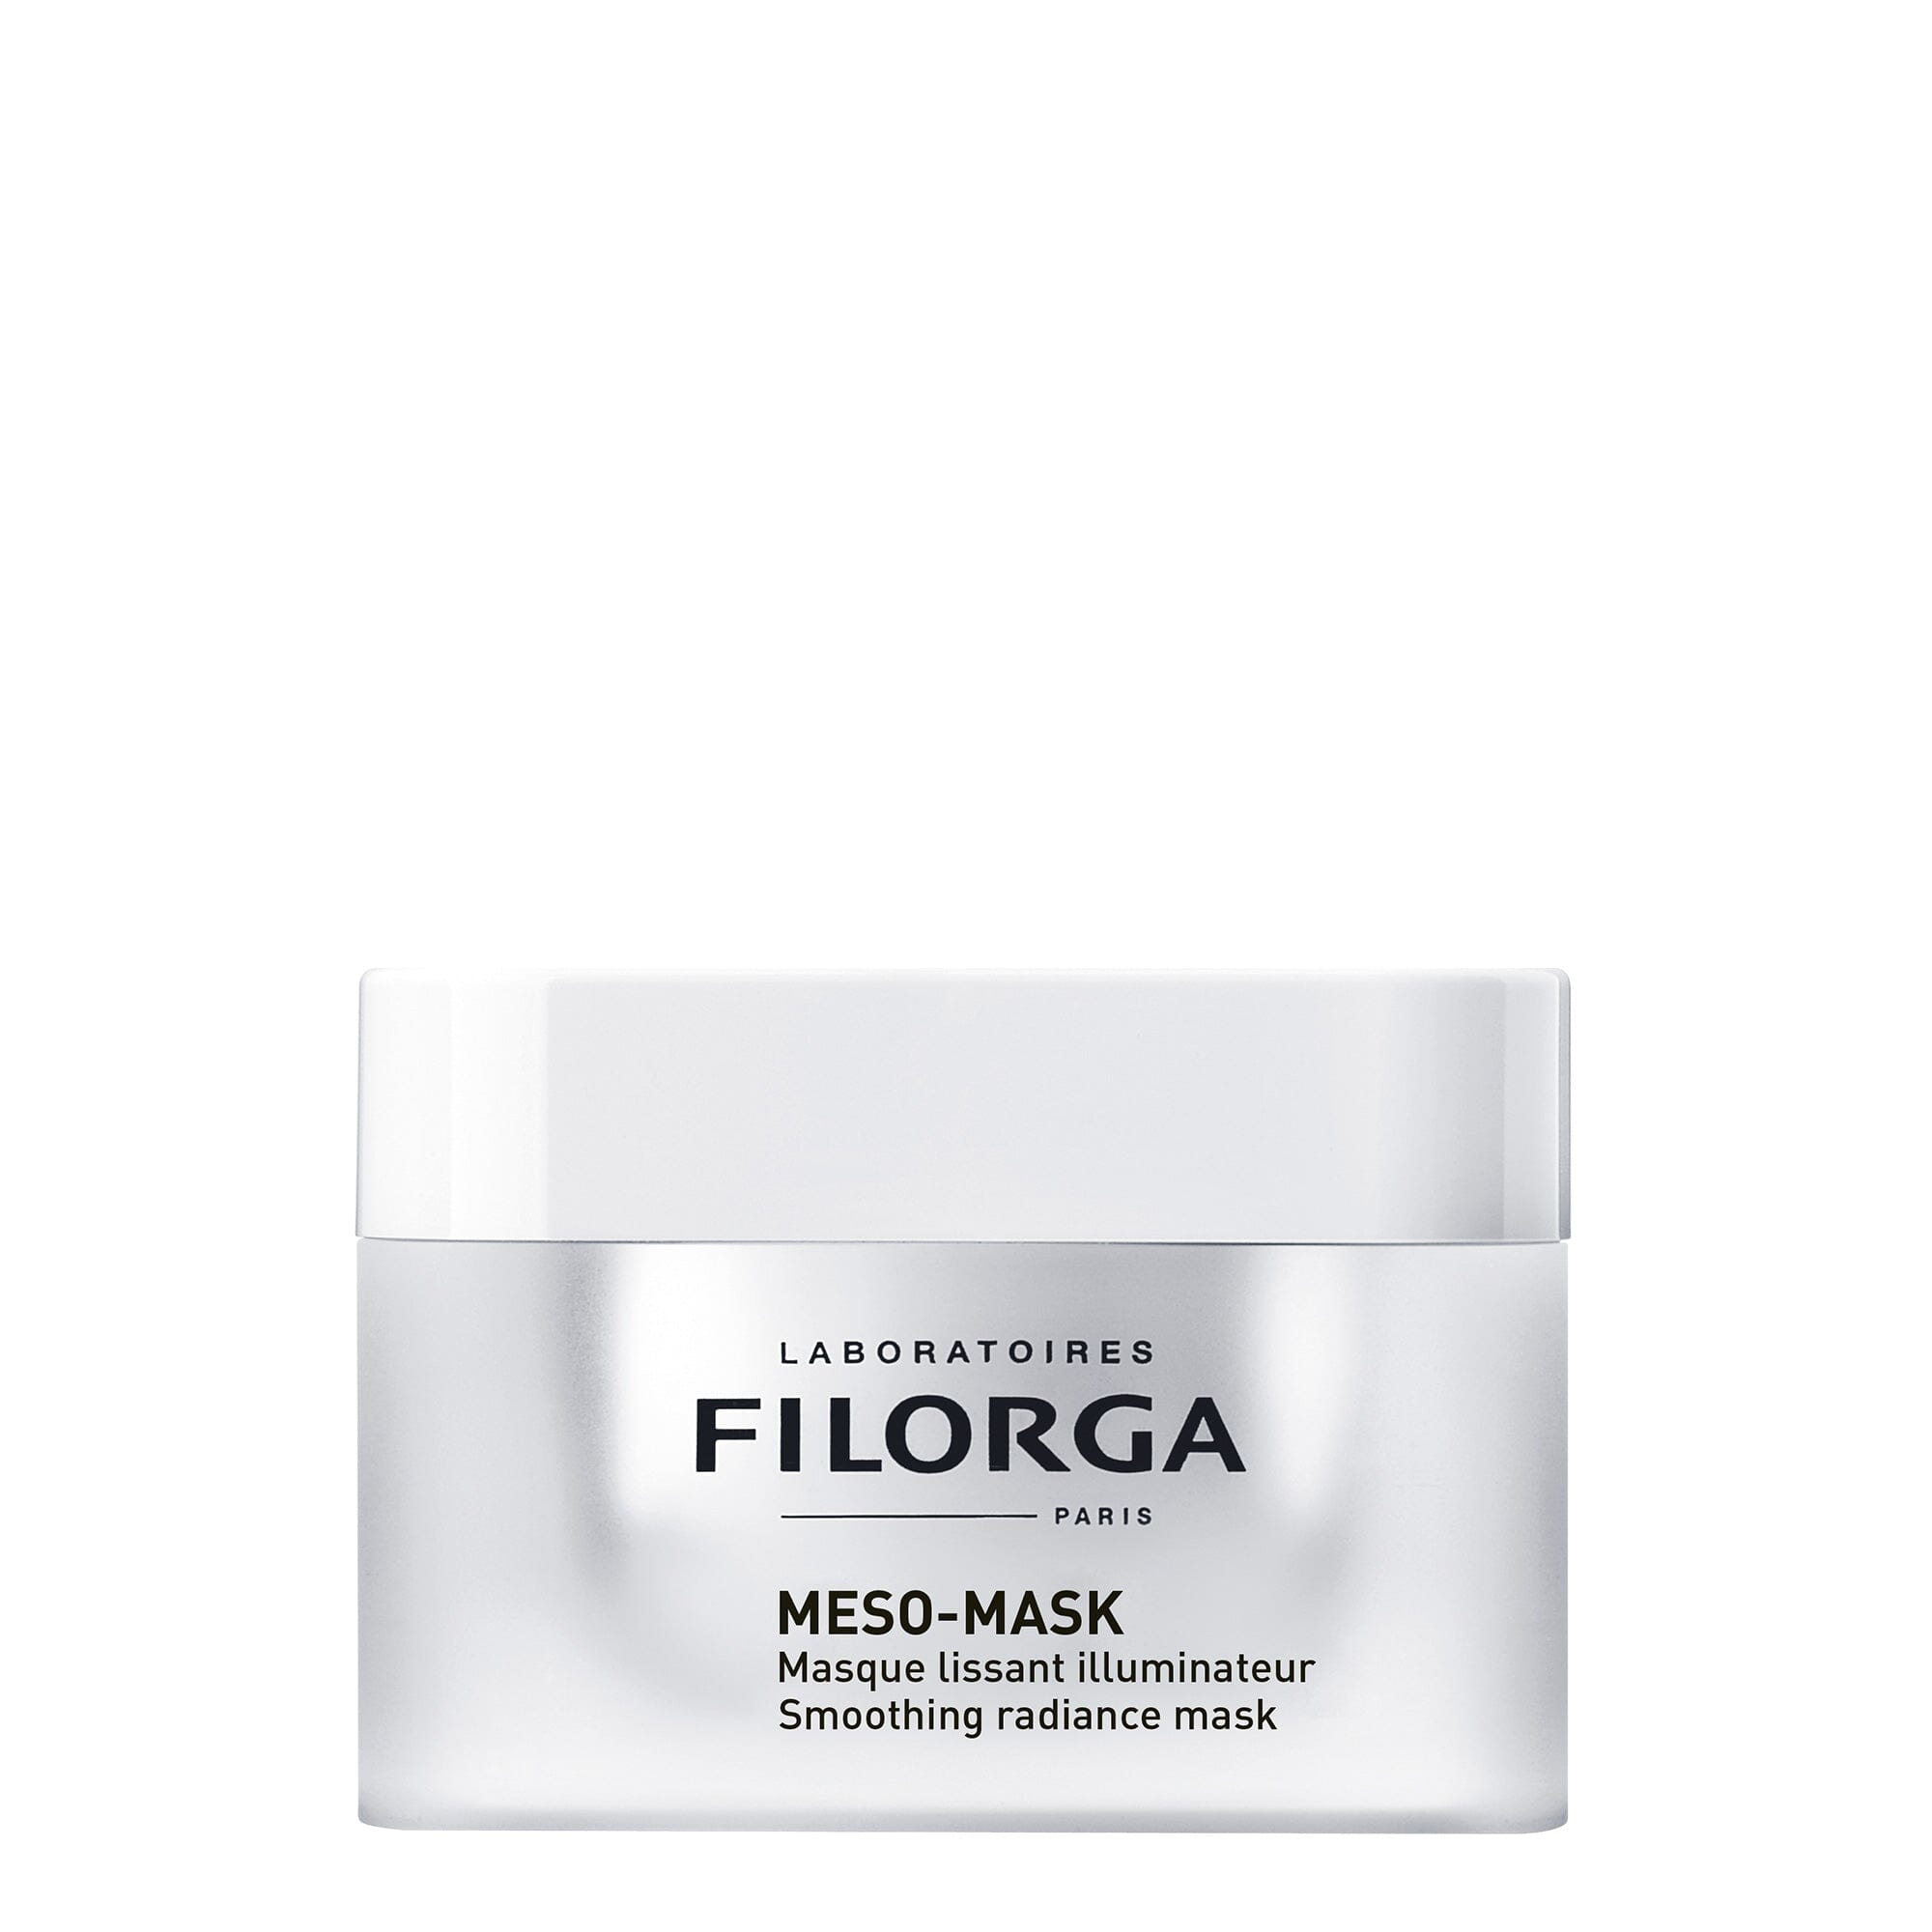 Filorga MESO-MASK Smoothing Radiance Mask Filorga 1.69 oz. Shop at Exclusive Beauty Club